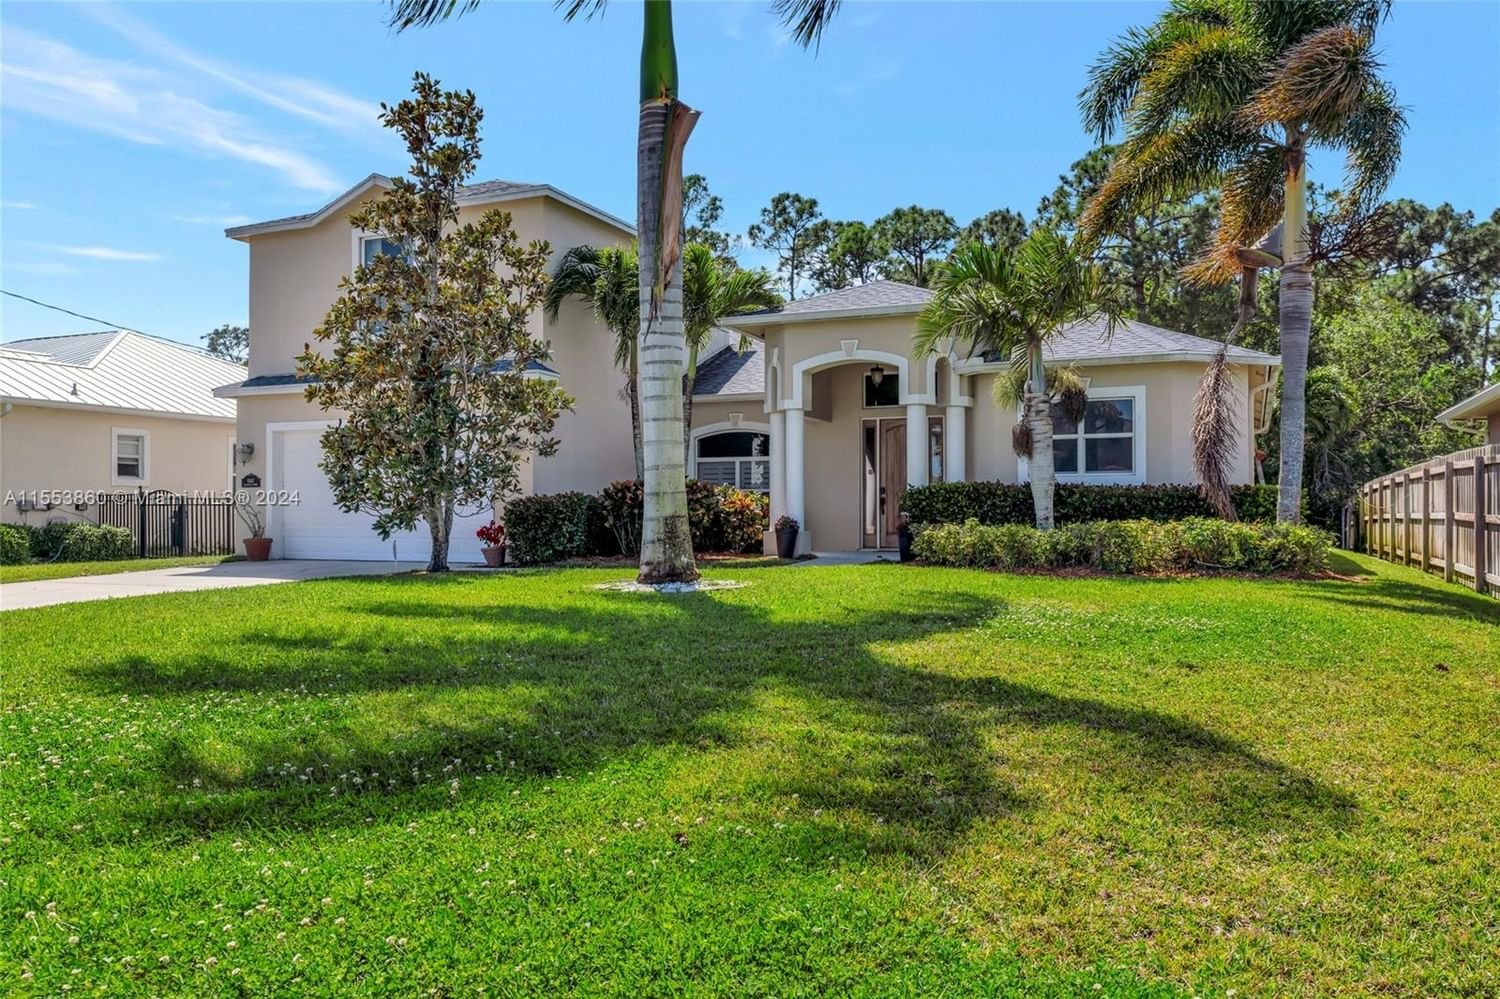 Real estate property located at 8362 Magnolia Ave, Martin County, POINCIANA GARDENS, Hobe Sound, FL